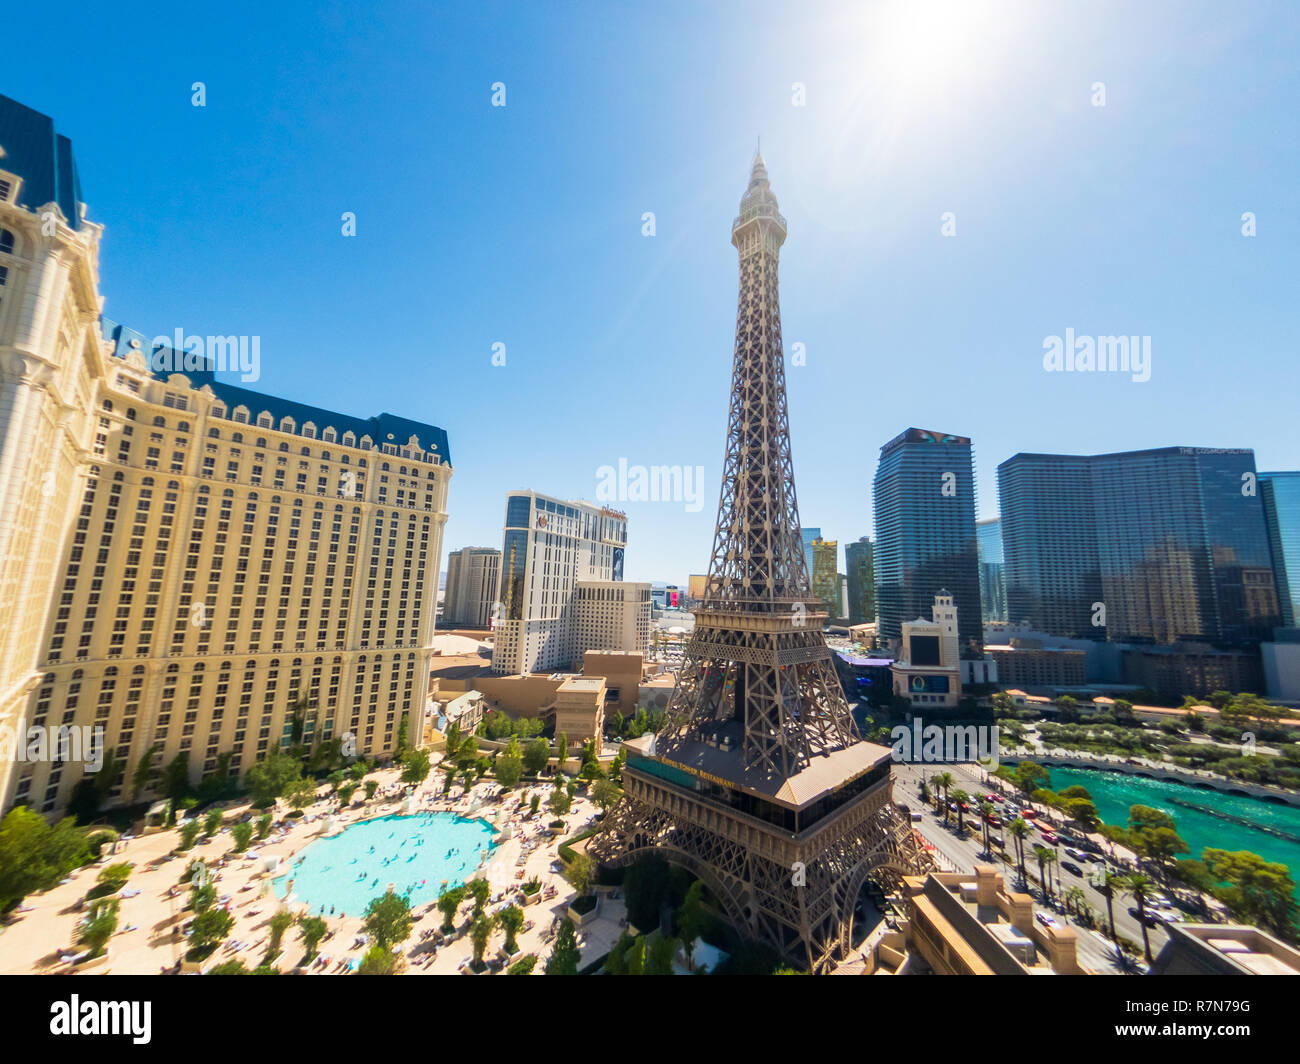 Paris Las Vegas Hotel & Casino Pool  Las vegas hotels, Paris las vegas, Vegas  pools